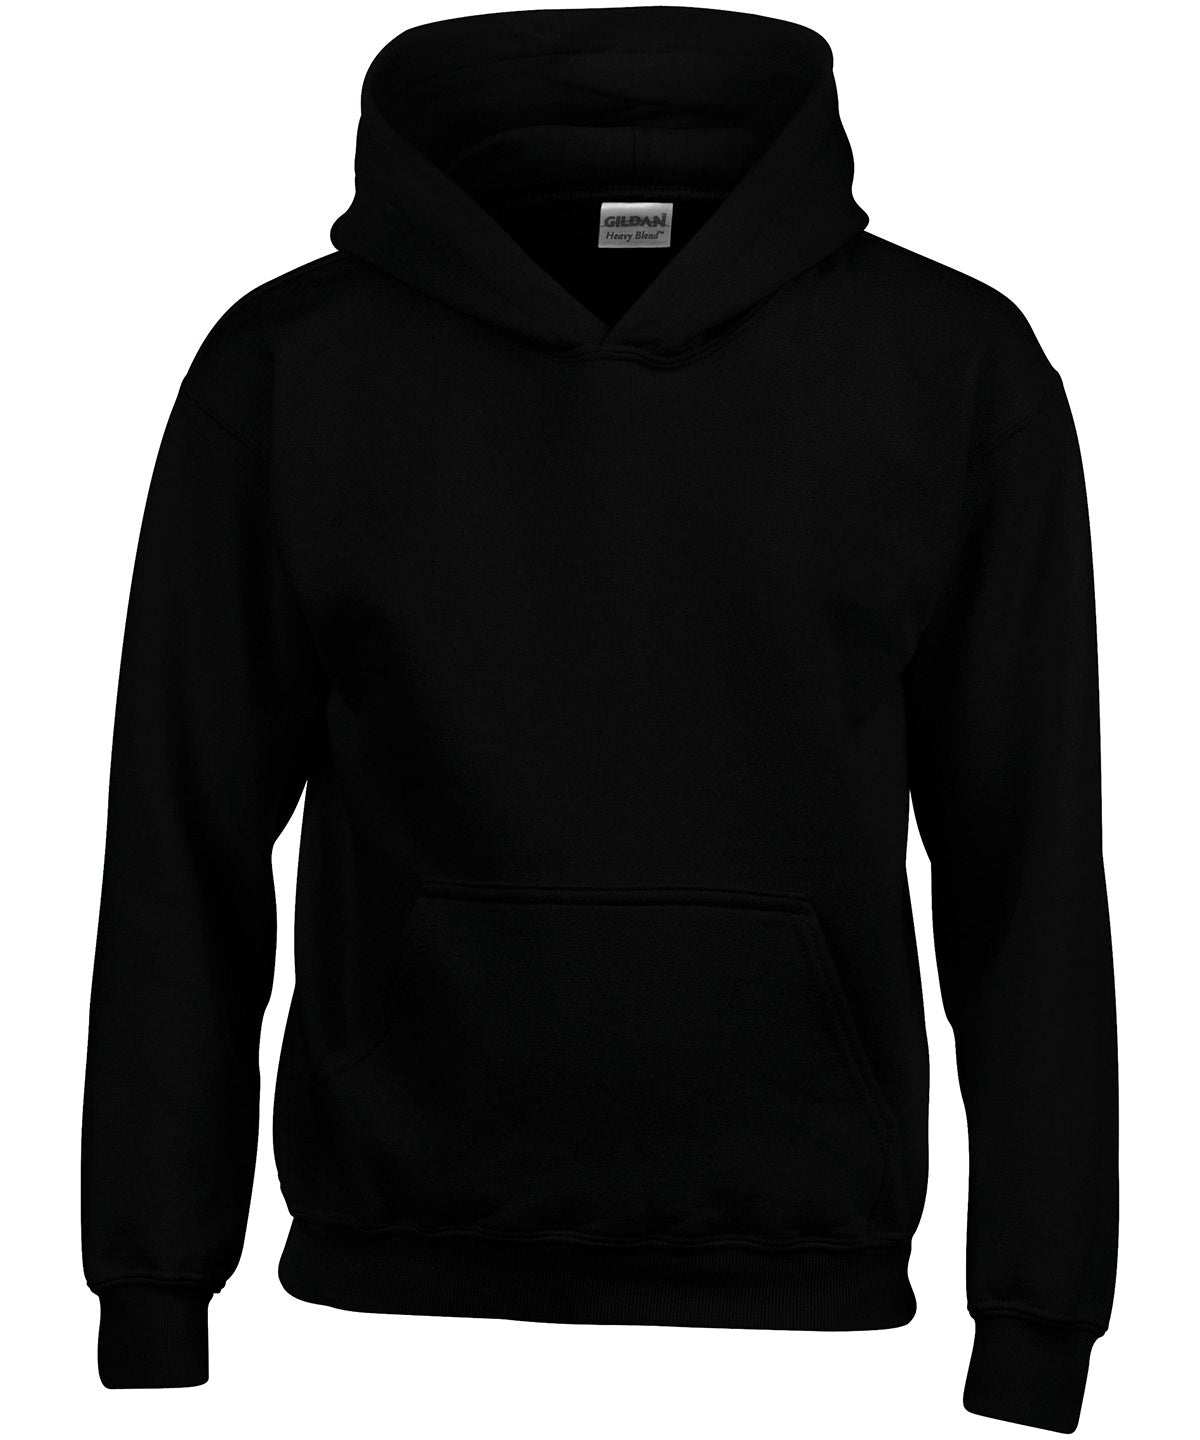 Heavy Blend youth hooded sweatshirt | Black